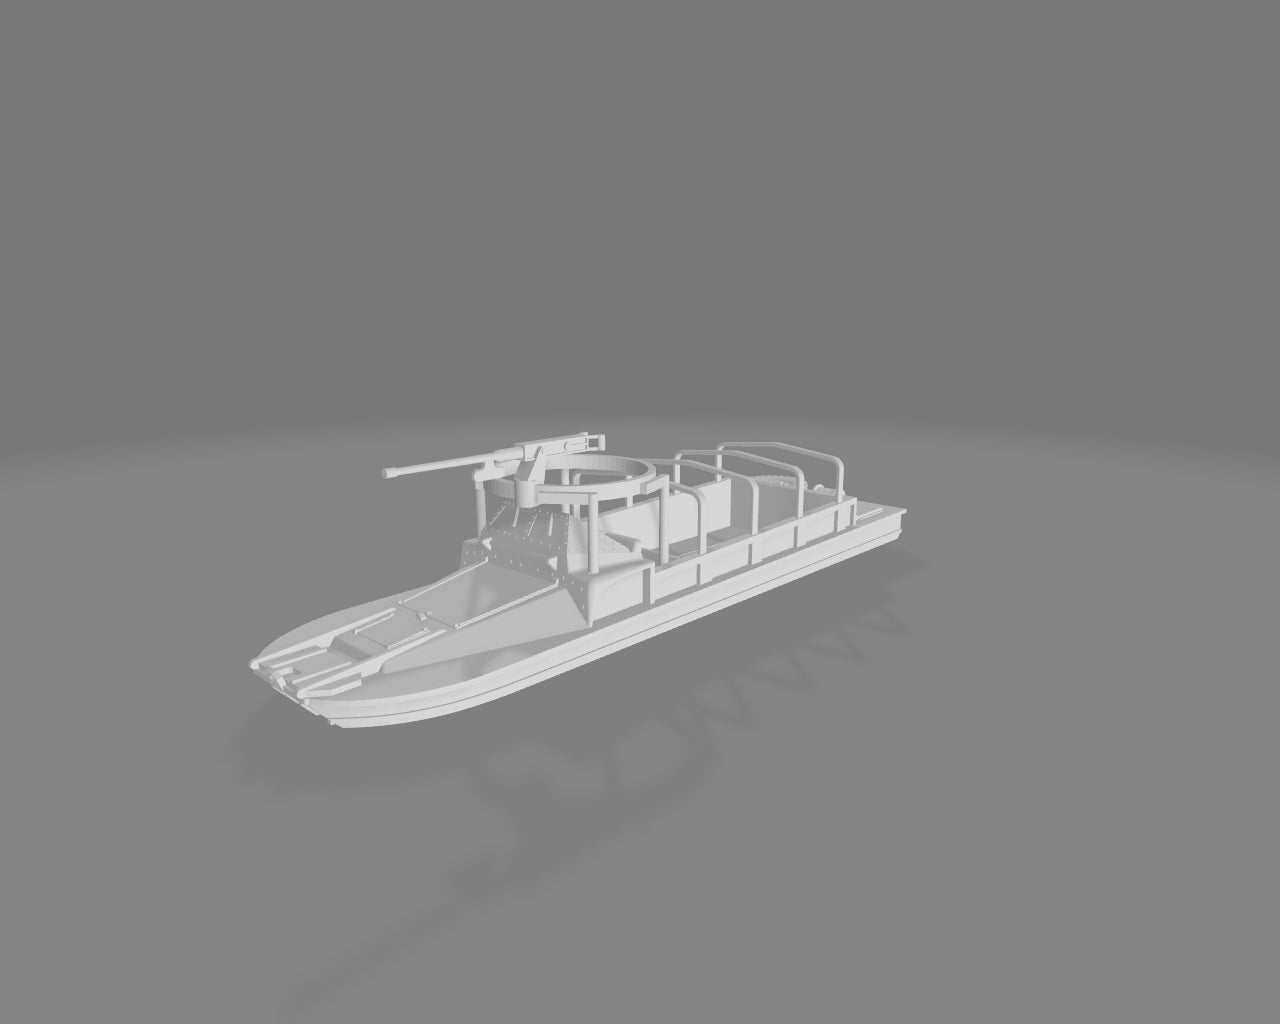 American GMC DUKW 353 - Waterborne